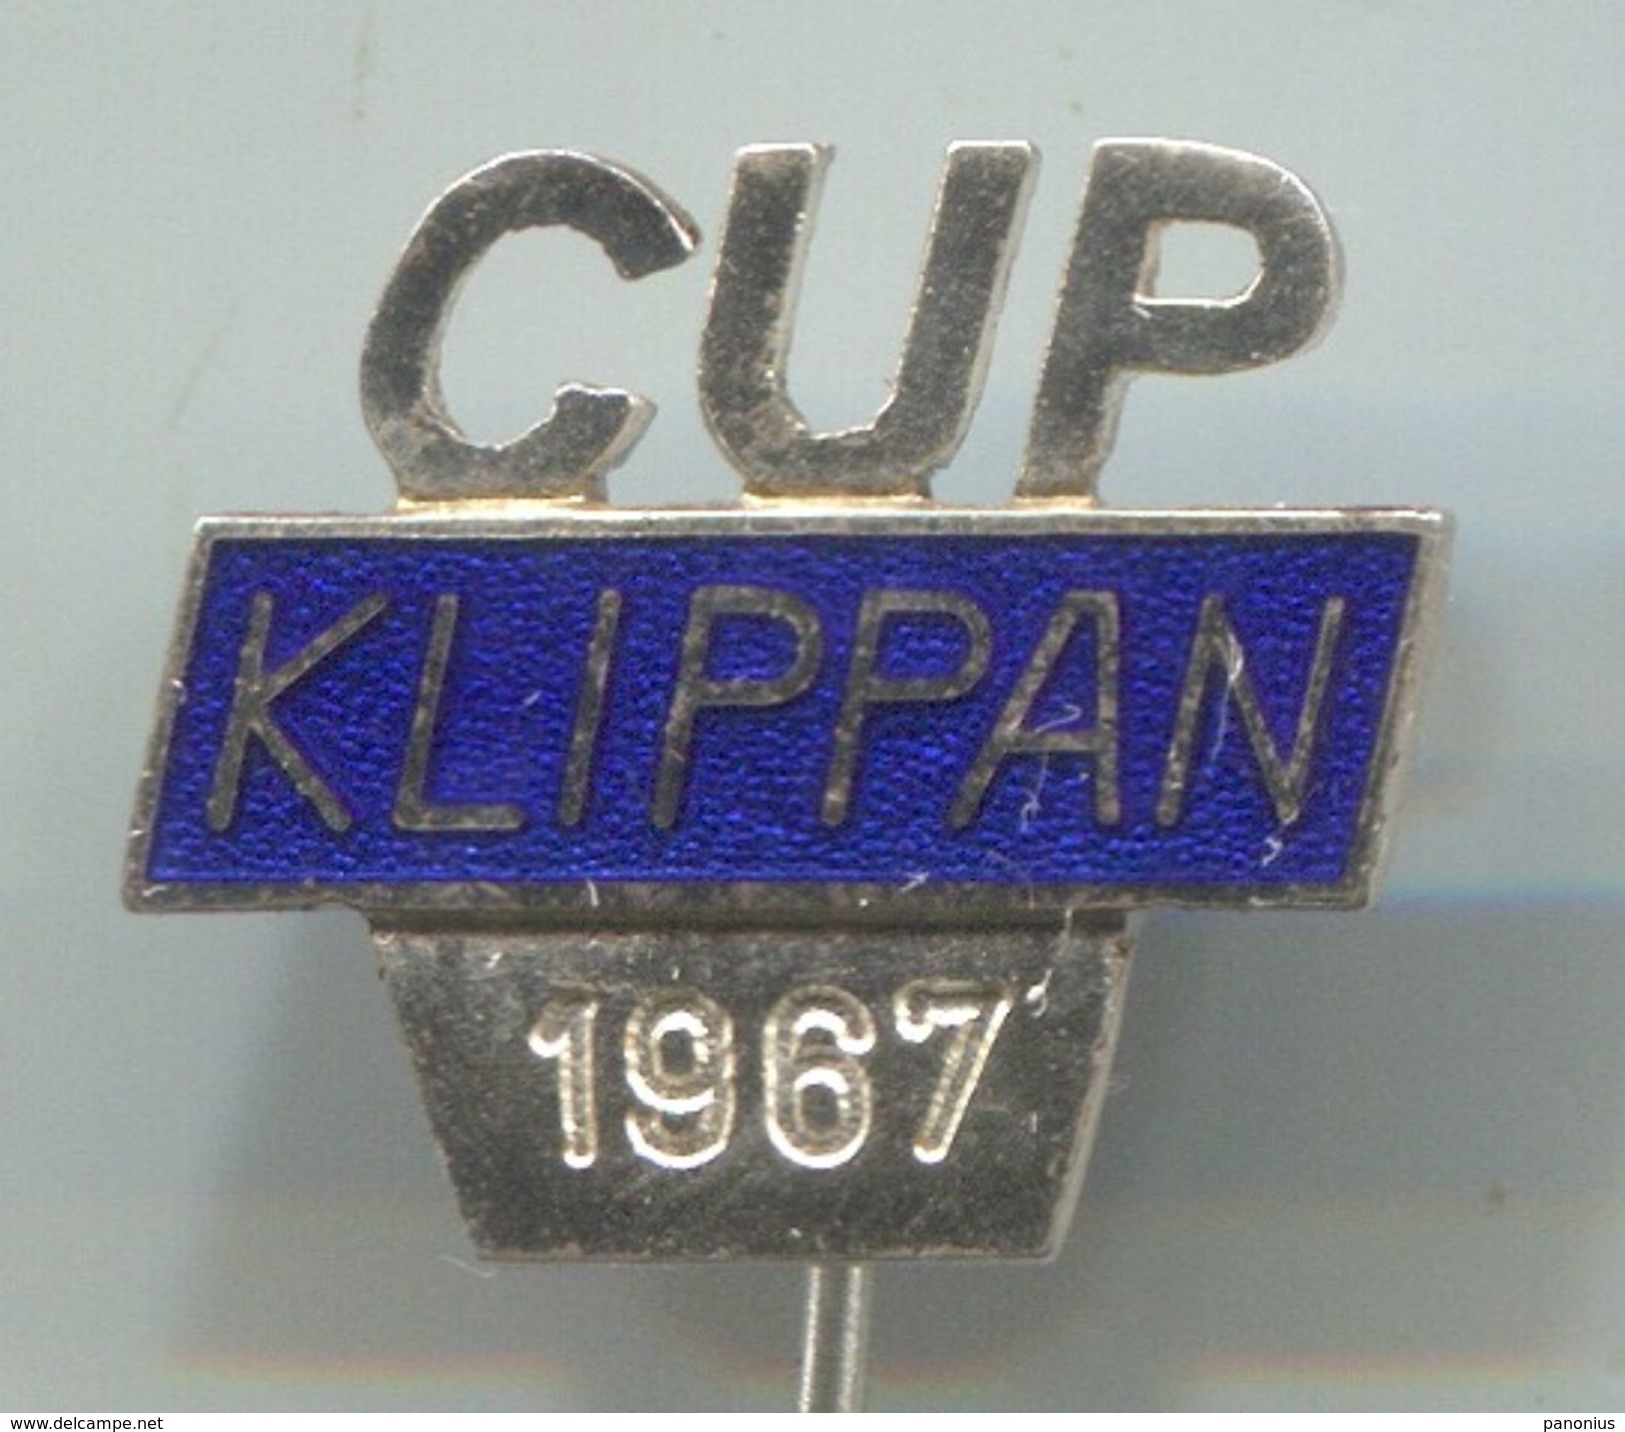 KLIPPAN CUP 1967 - Rally, Formula, Enamel, Vintage Pin, Badge, Abzeichen - Car Racing - F1